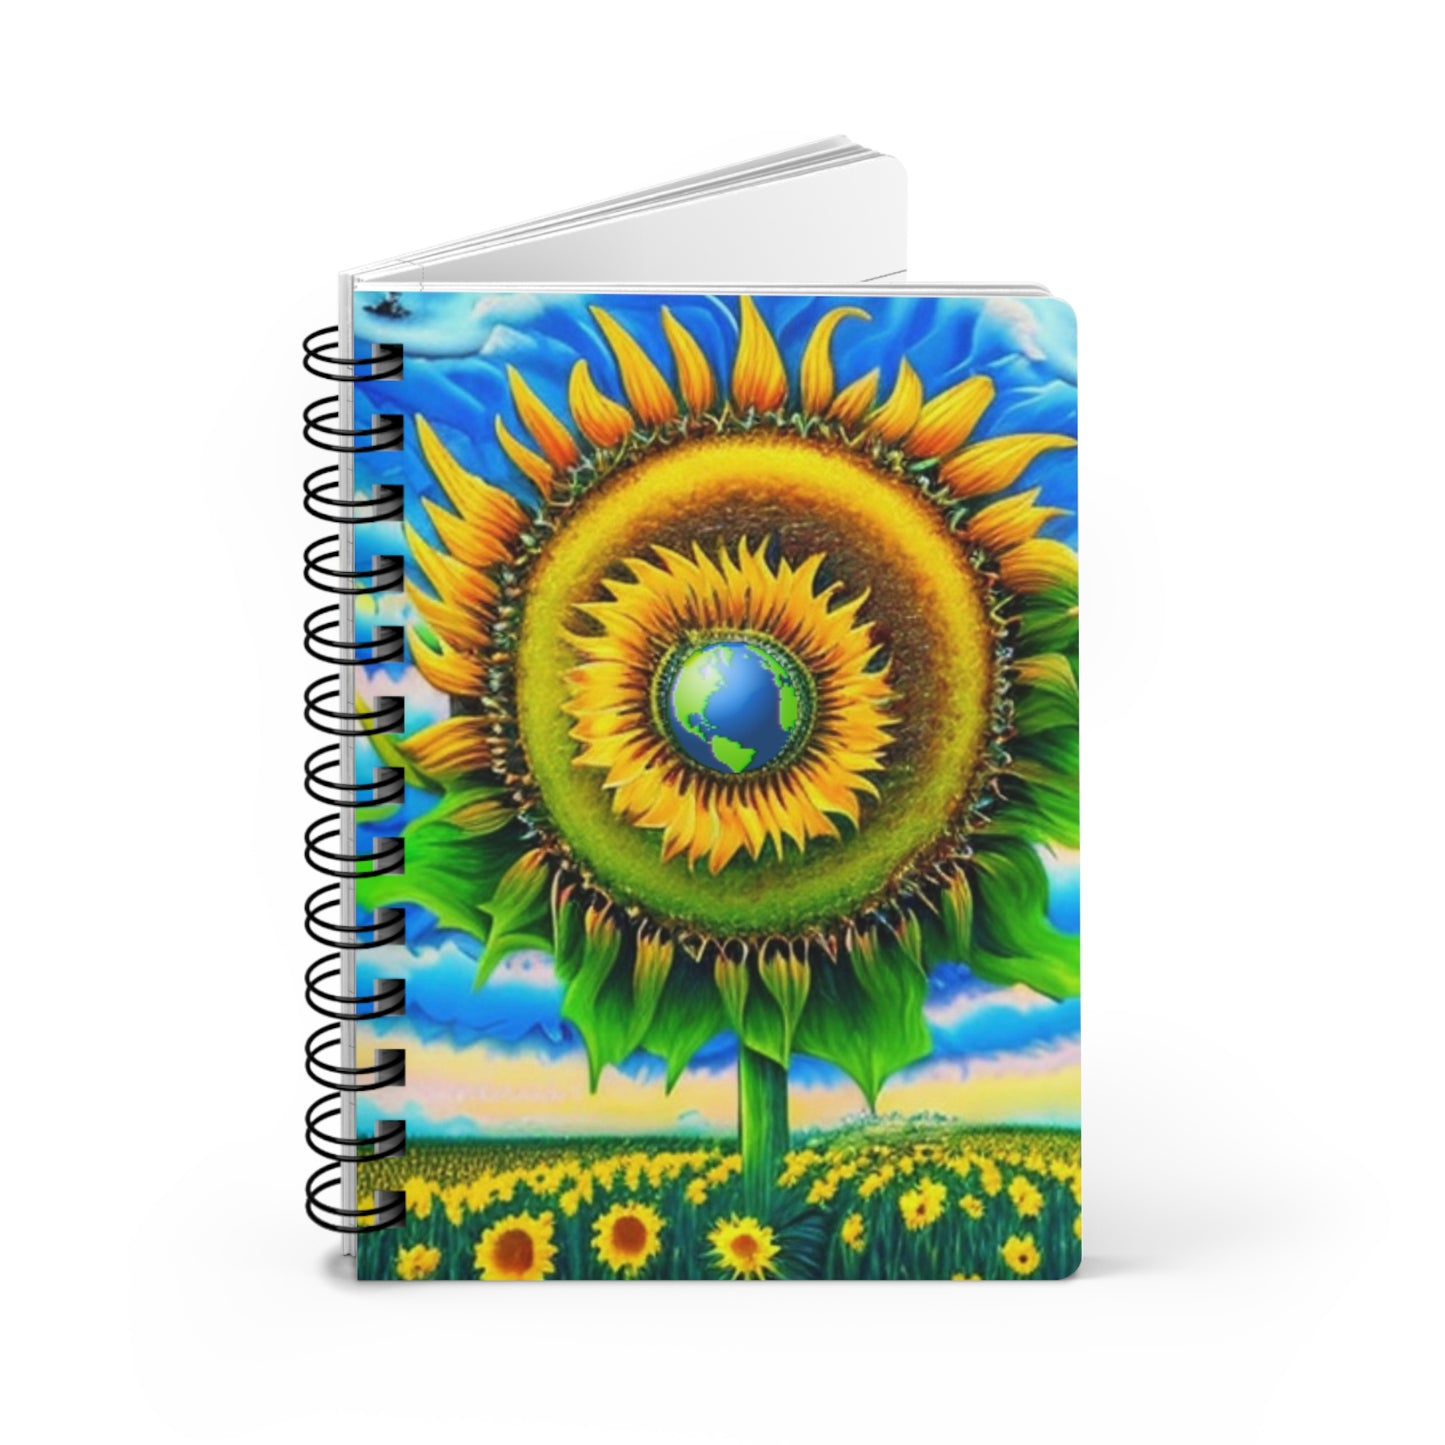 Spiral Earth Sunflower Writing Sketch Inspiration Spiral Bound Journal